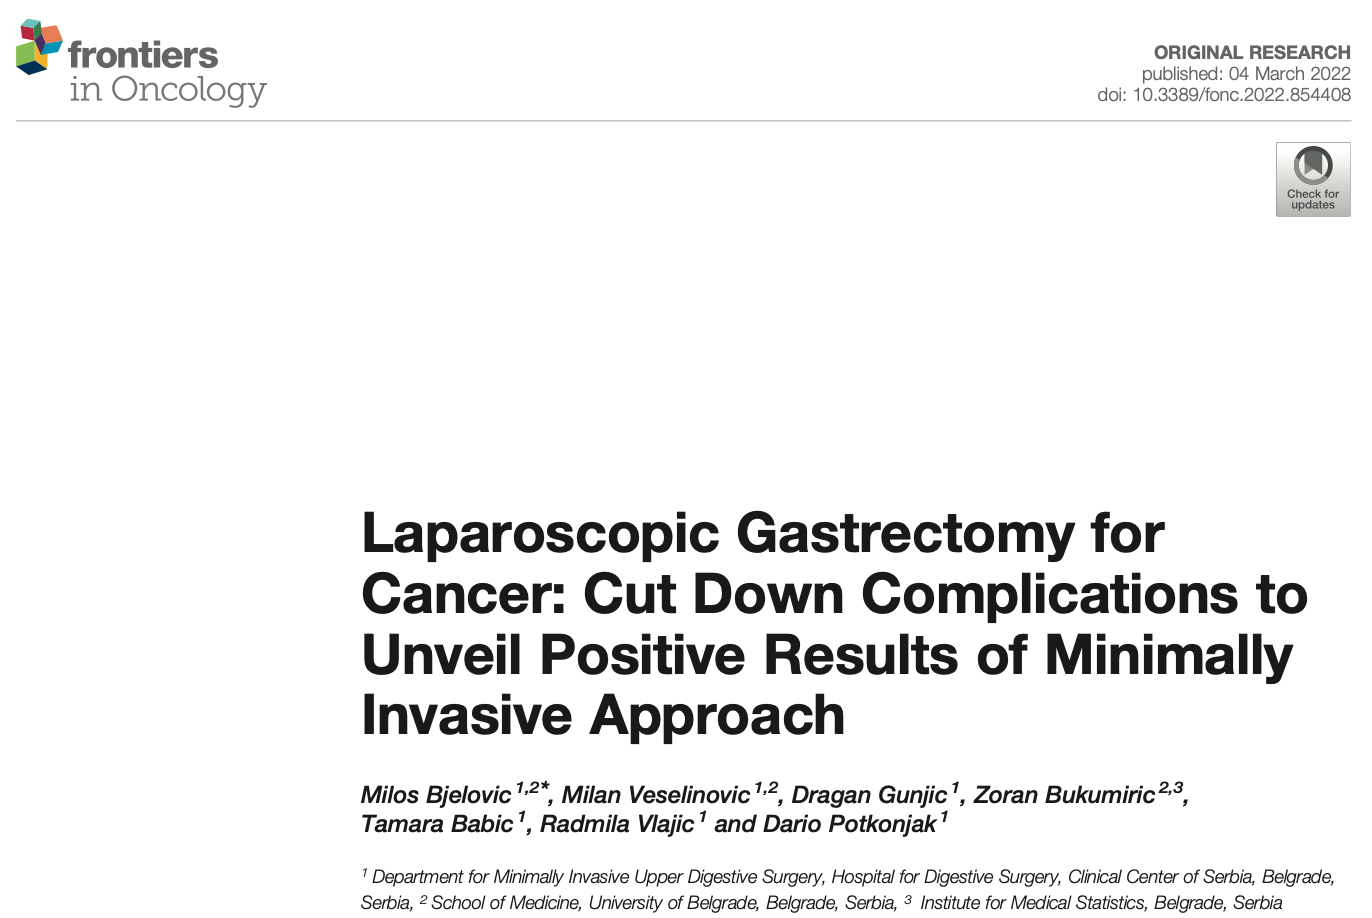 Laparoscopic Gastrectomy for Cancer